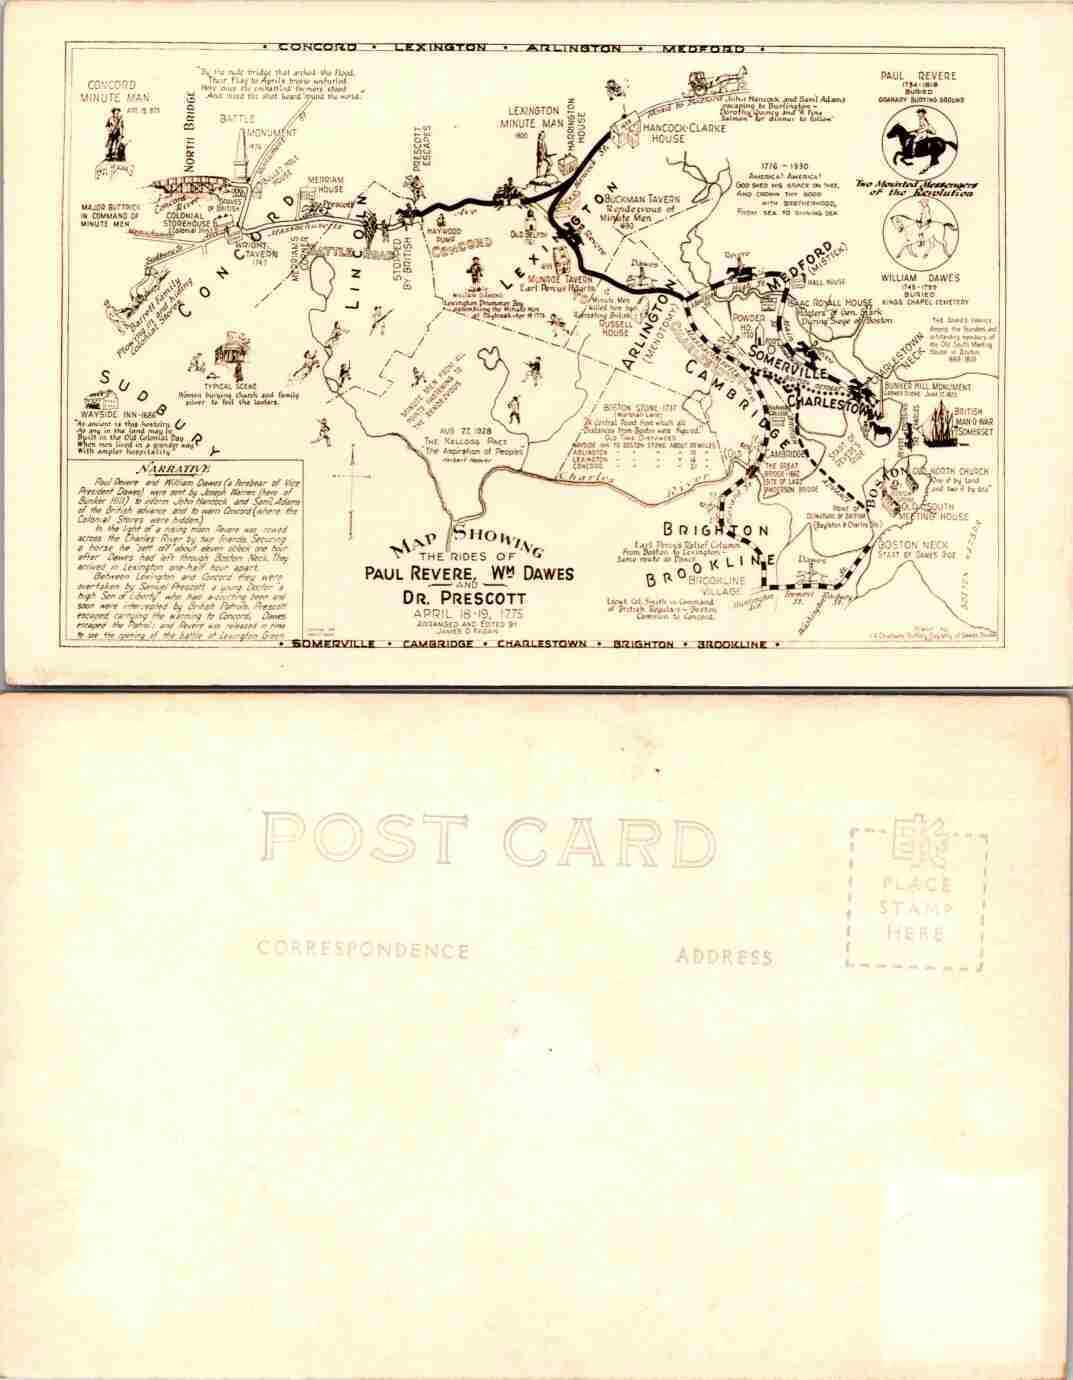 Vintage Postcard - Map Shows Rides Paul Revere, Dawes and Prescott 4/18-19/1775